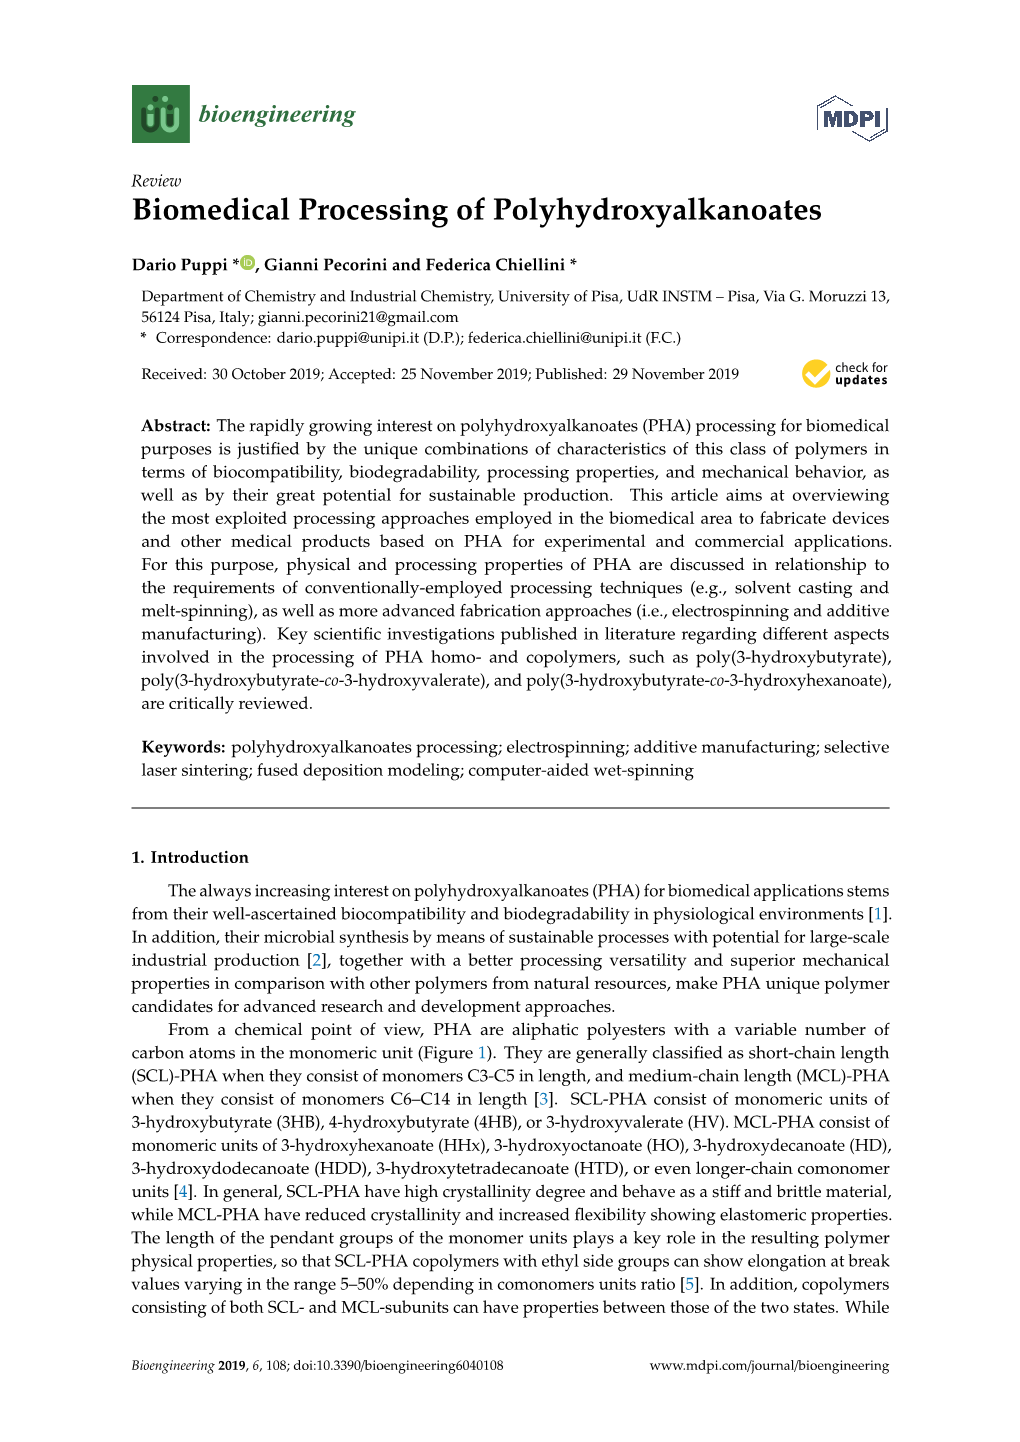 Biomedical Processing of Polyhydroxyalkanoates